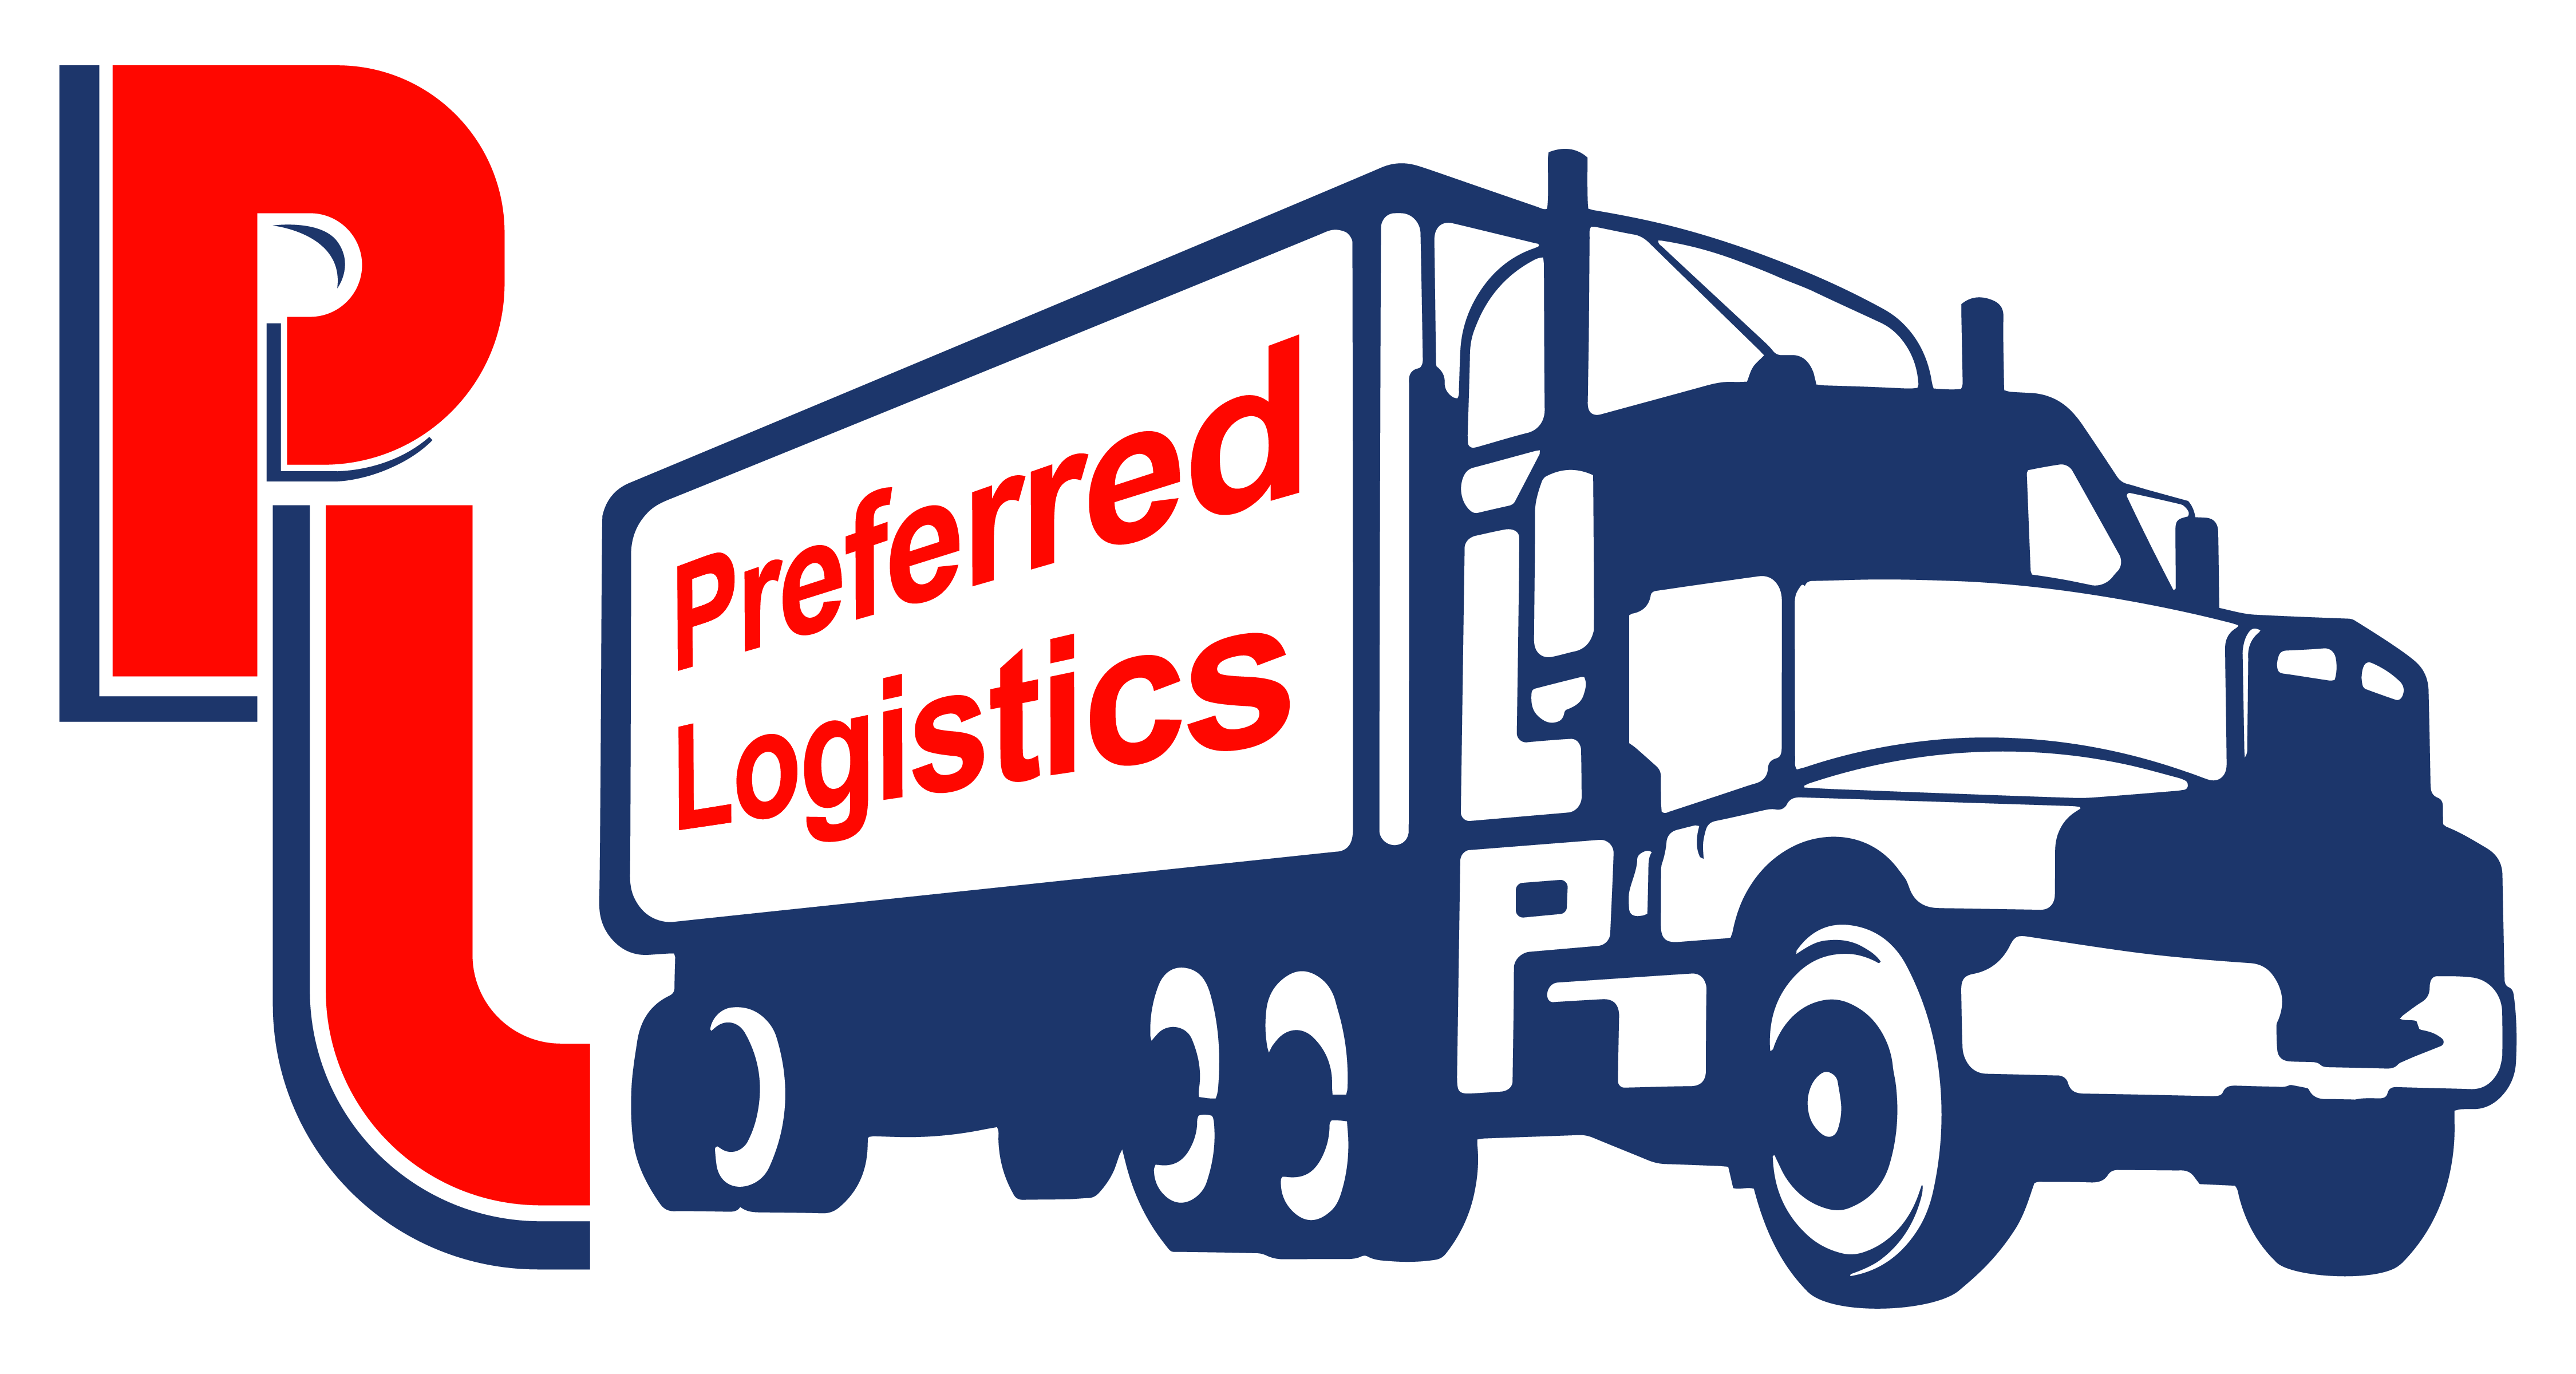 Preferred Logistics